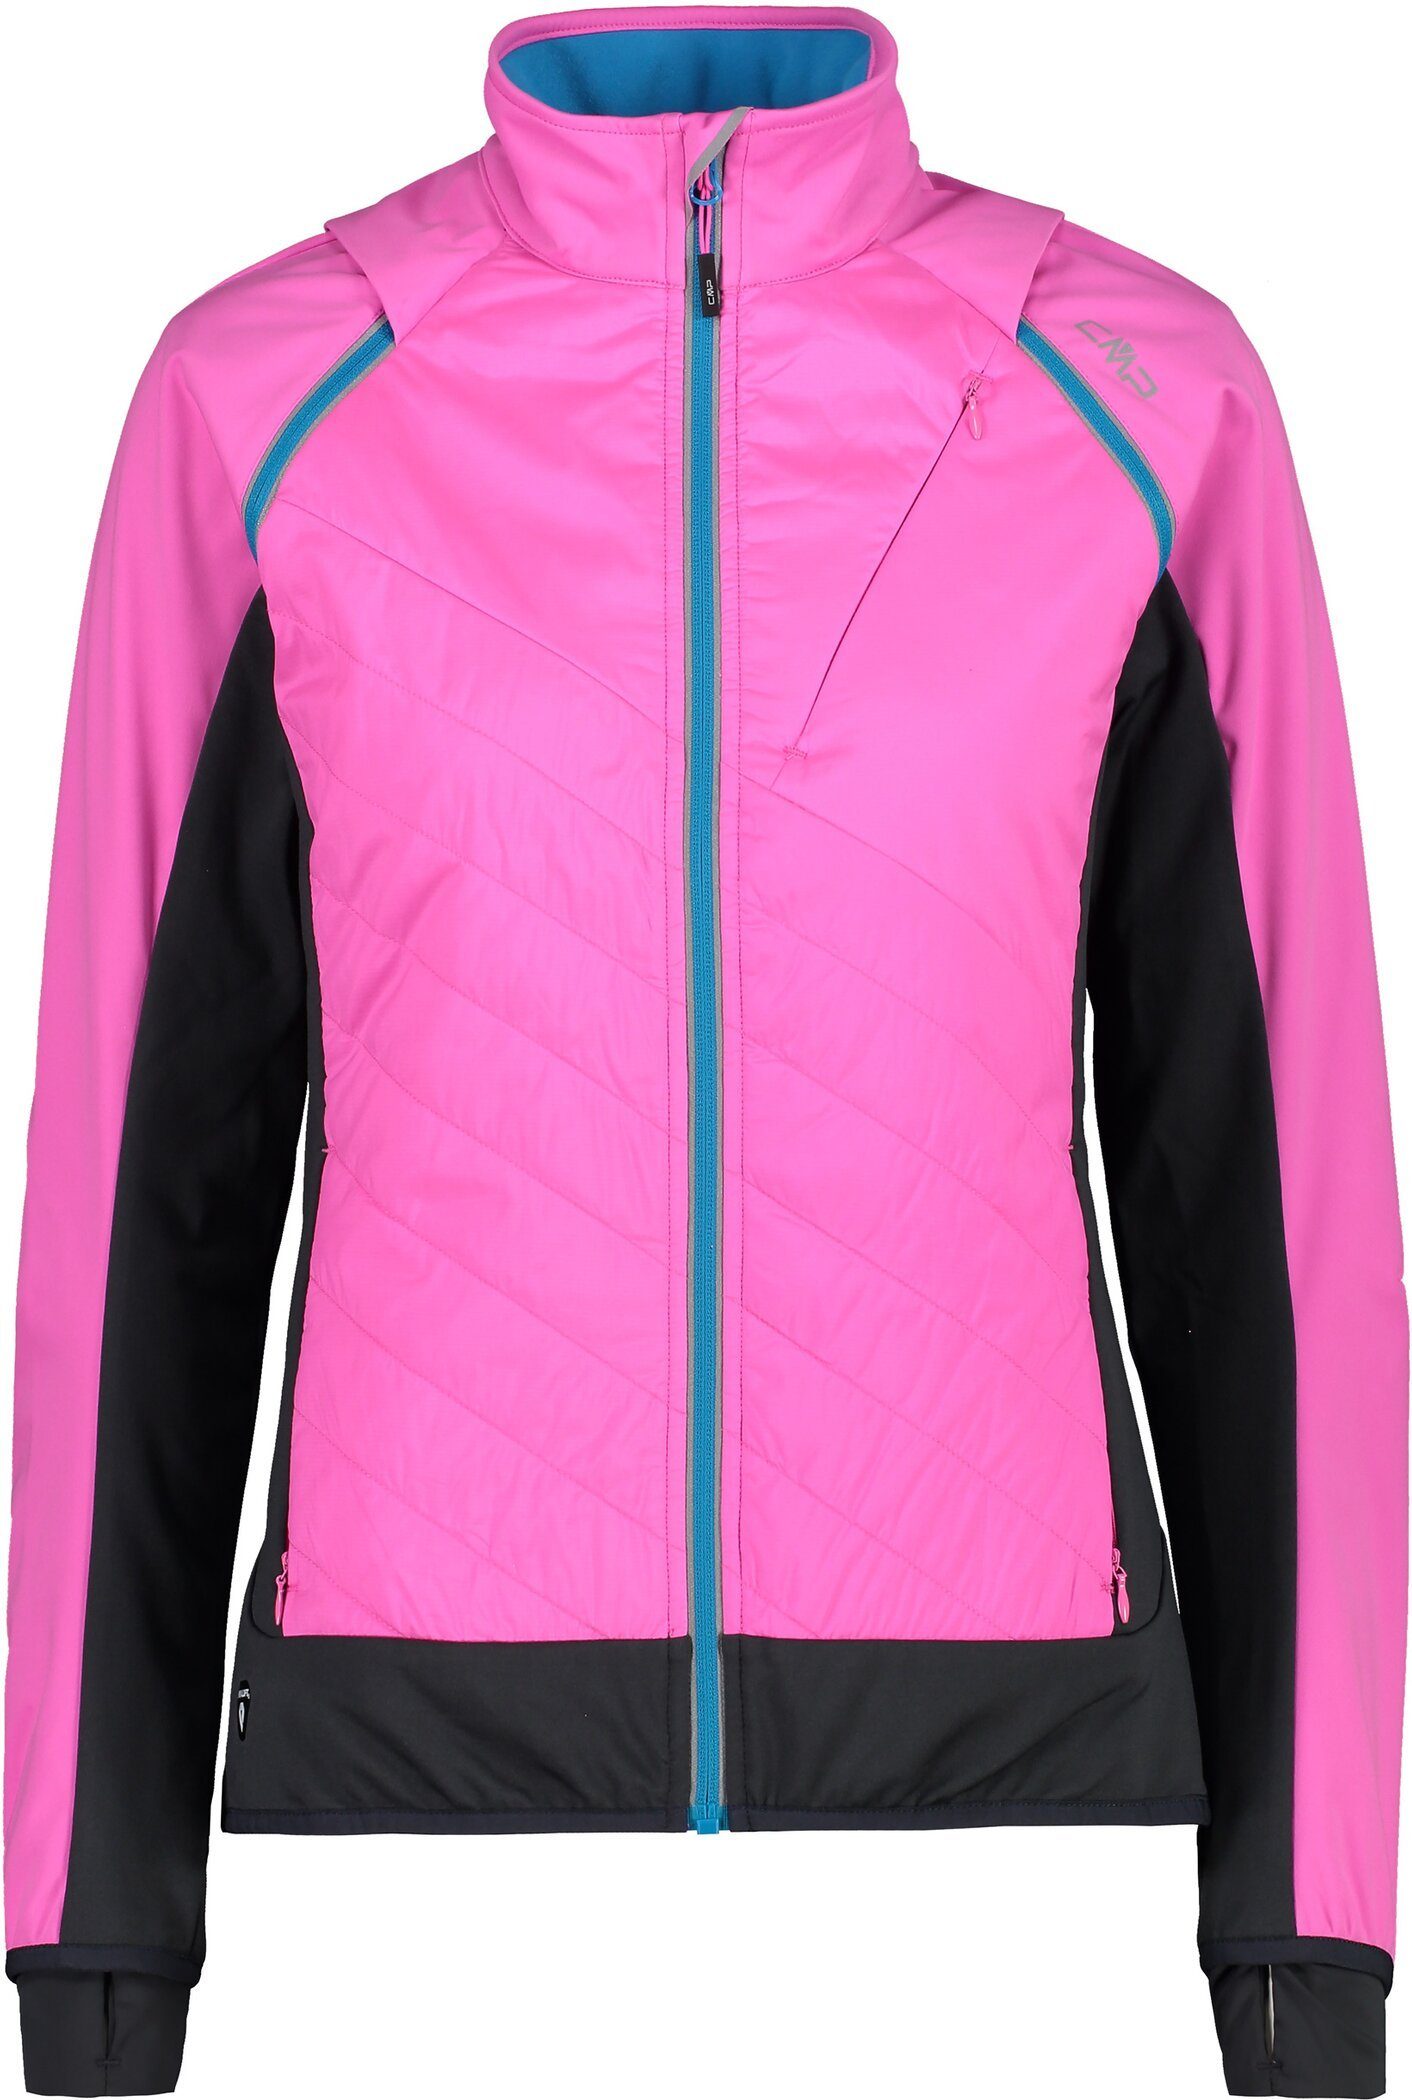 CMP CMP Radjacke Jacke Woman Bike Jacket pink winddicht atmungsaktiv leicht 